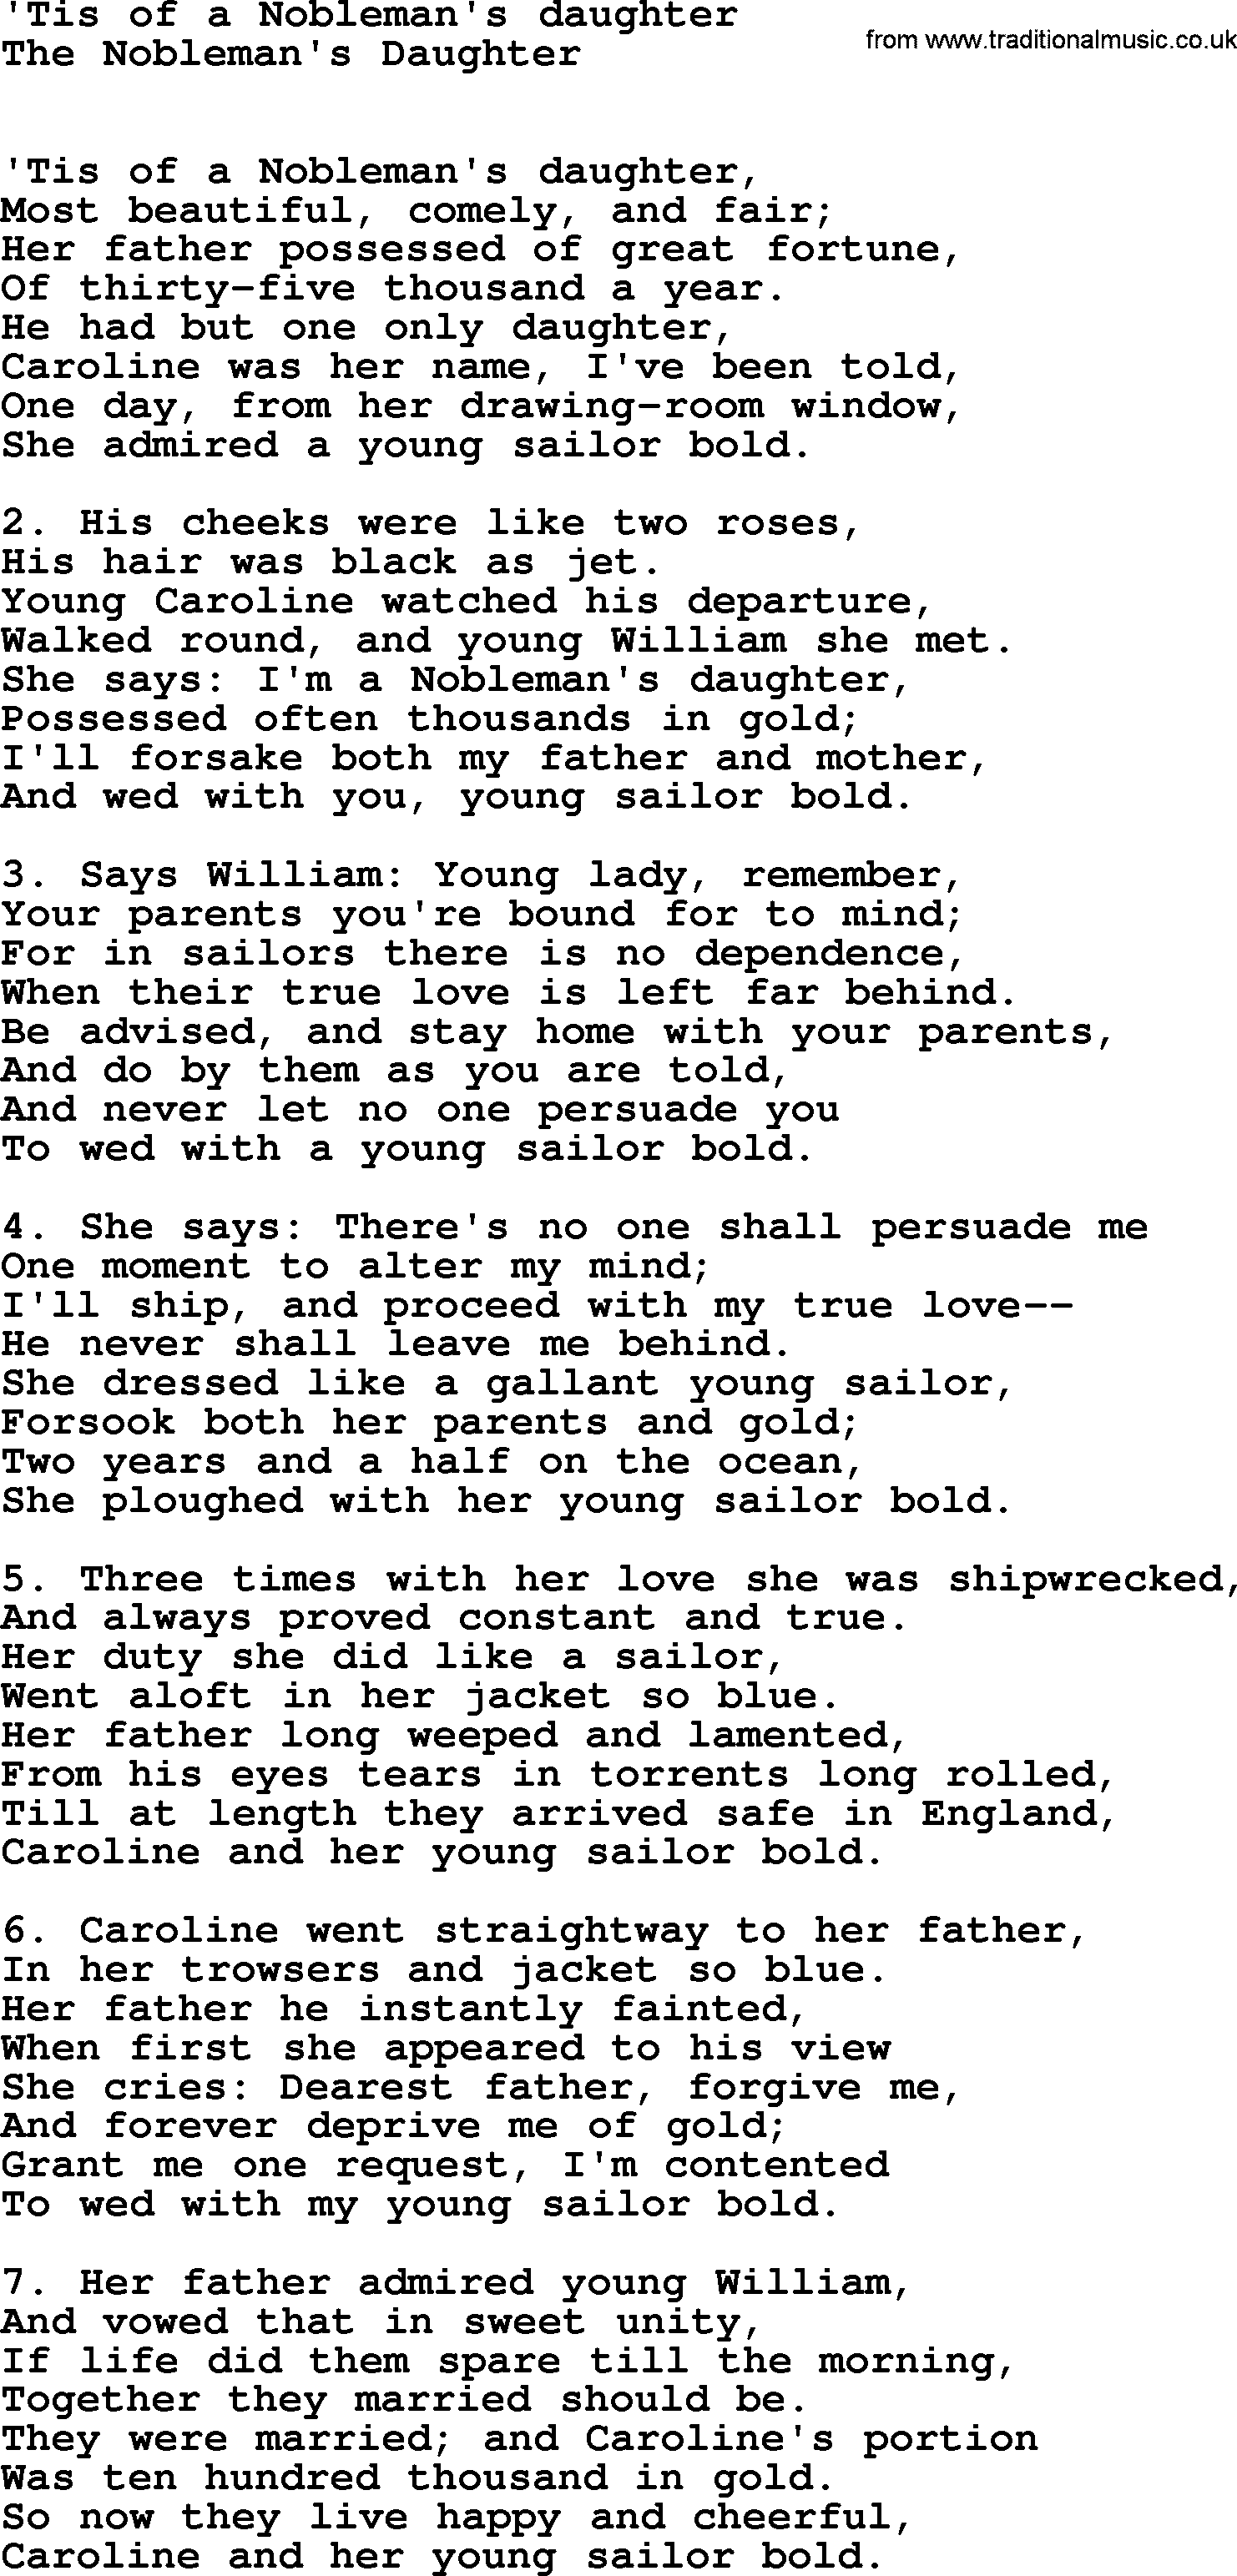 Sea Song or Shantie: Tis Of A Noblemans Daughter, lyrics